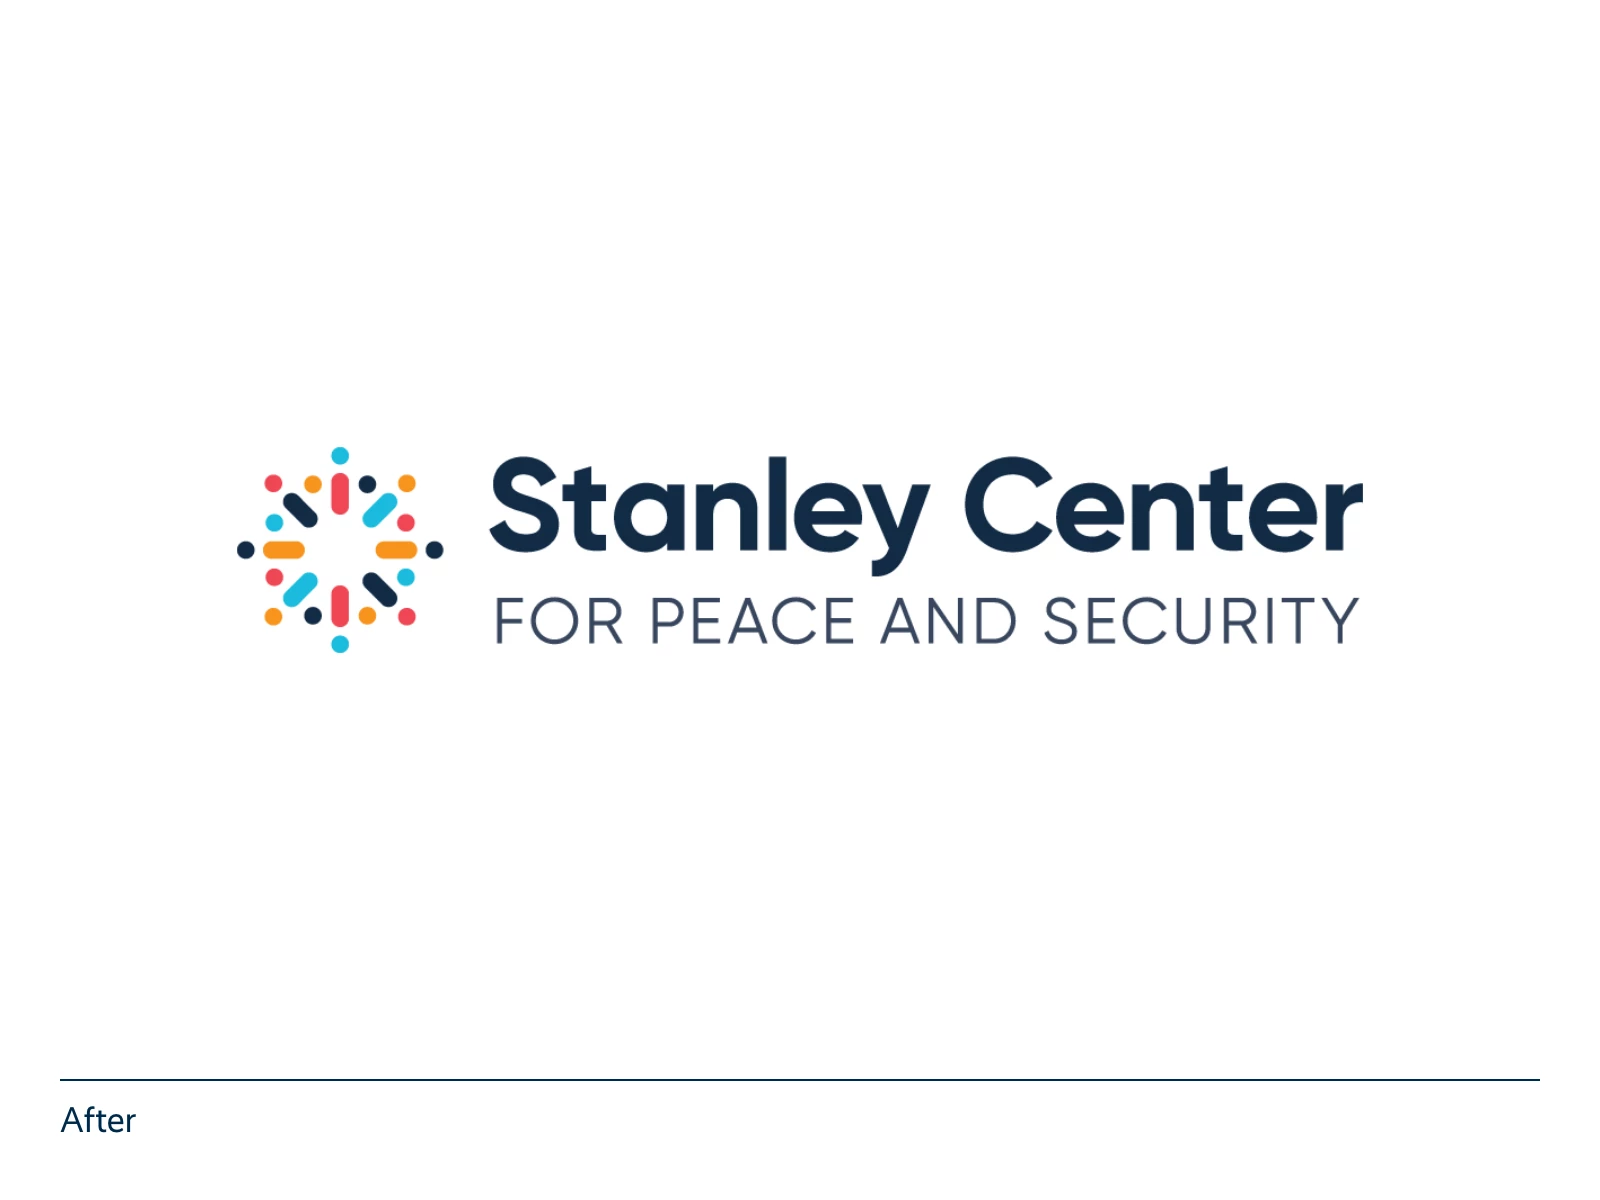 Stanley Center After Logo